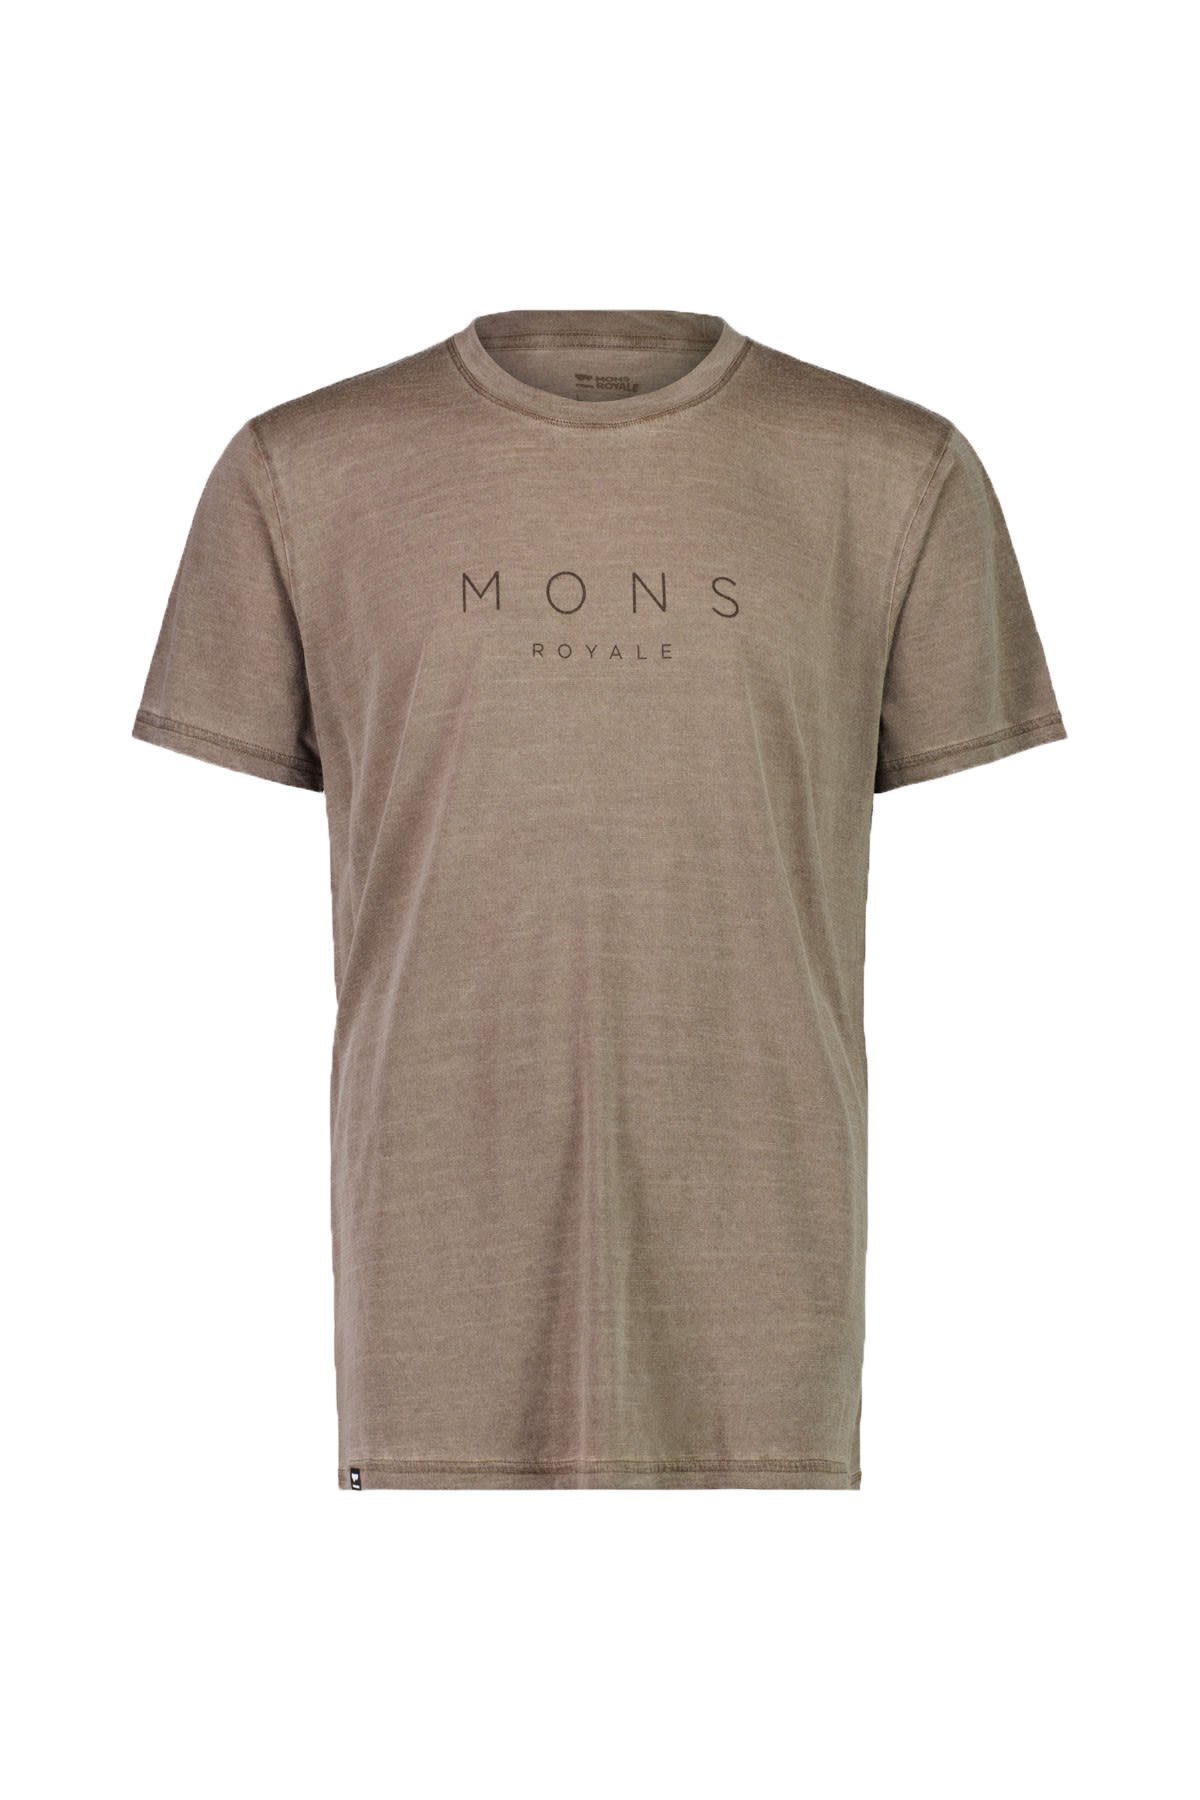 Mons Kurzarm-Shirt Herren Royale M Walnut T-Shirt T-shirt Royale Mons Zephyr